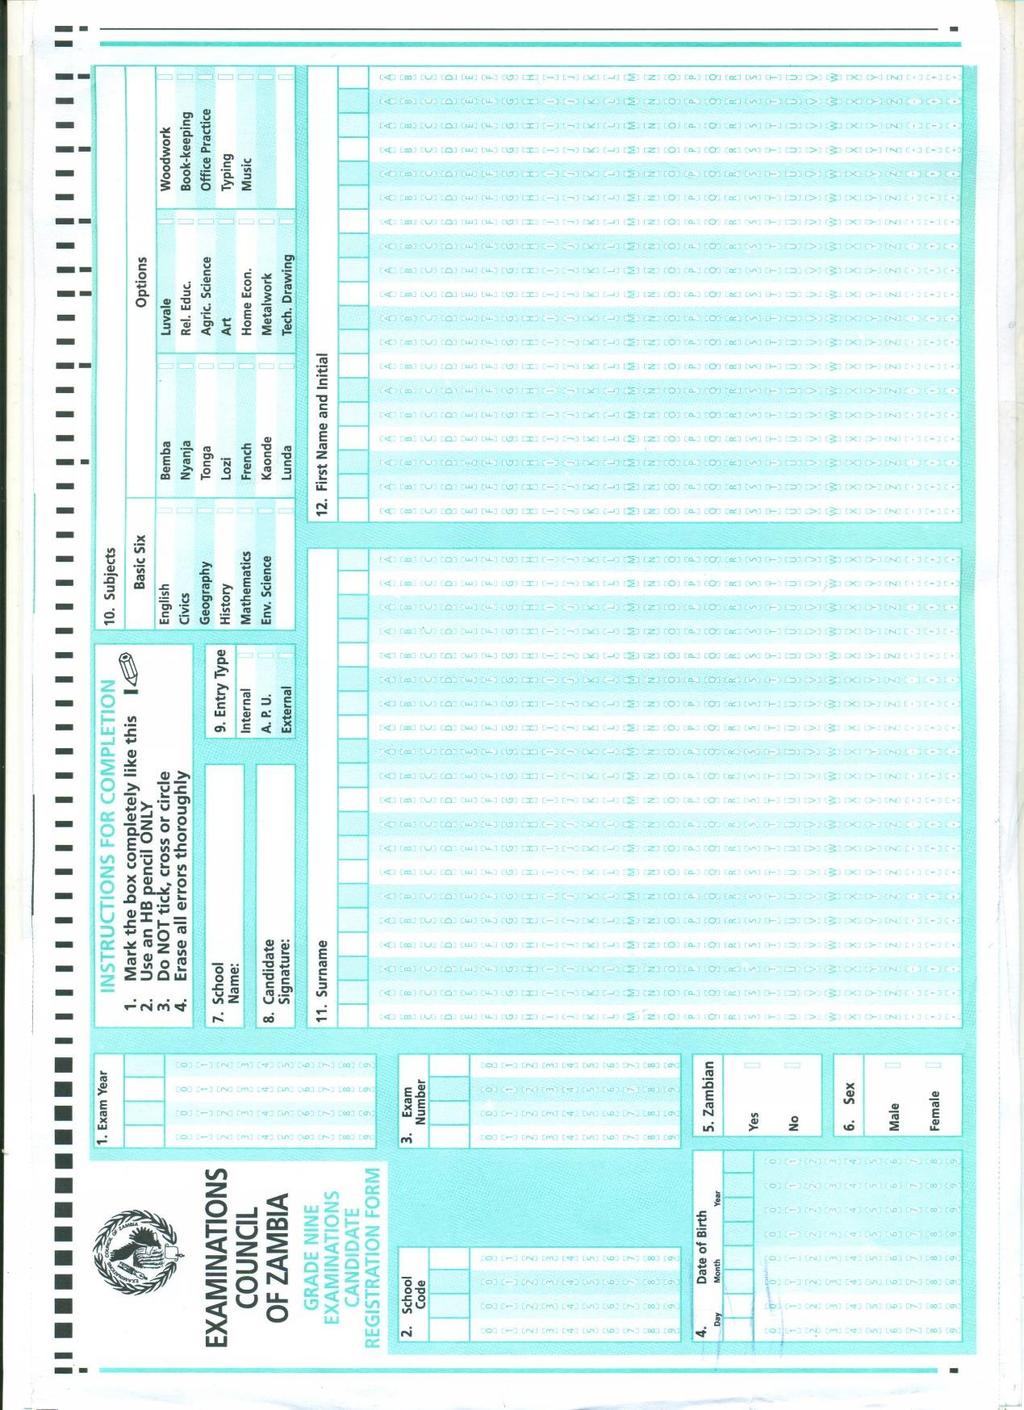 Figure 12: Grade 9 Examinations